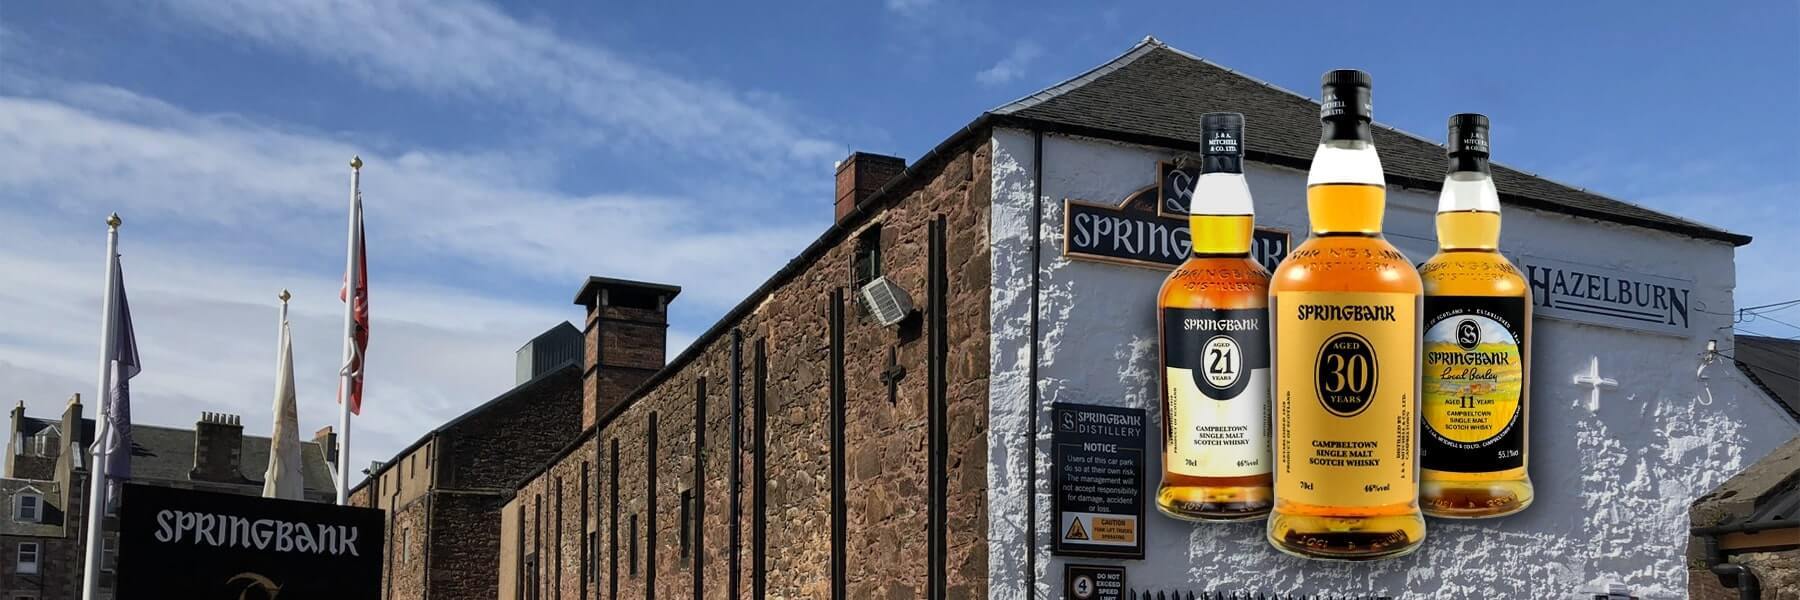 LoveScotch.com Presents: Springbank Distillery Collection